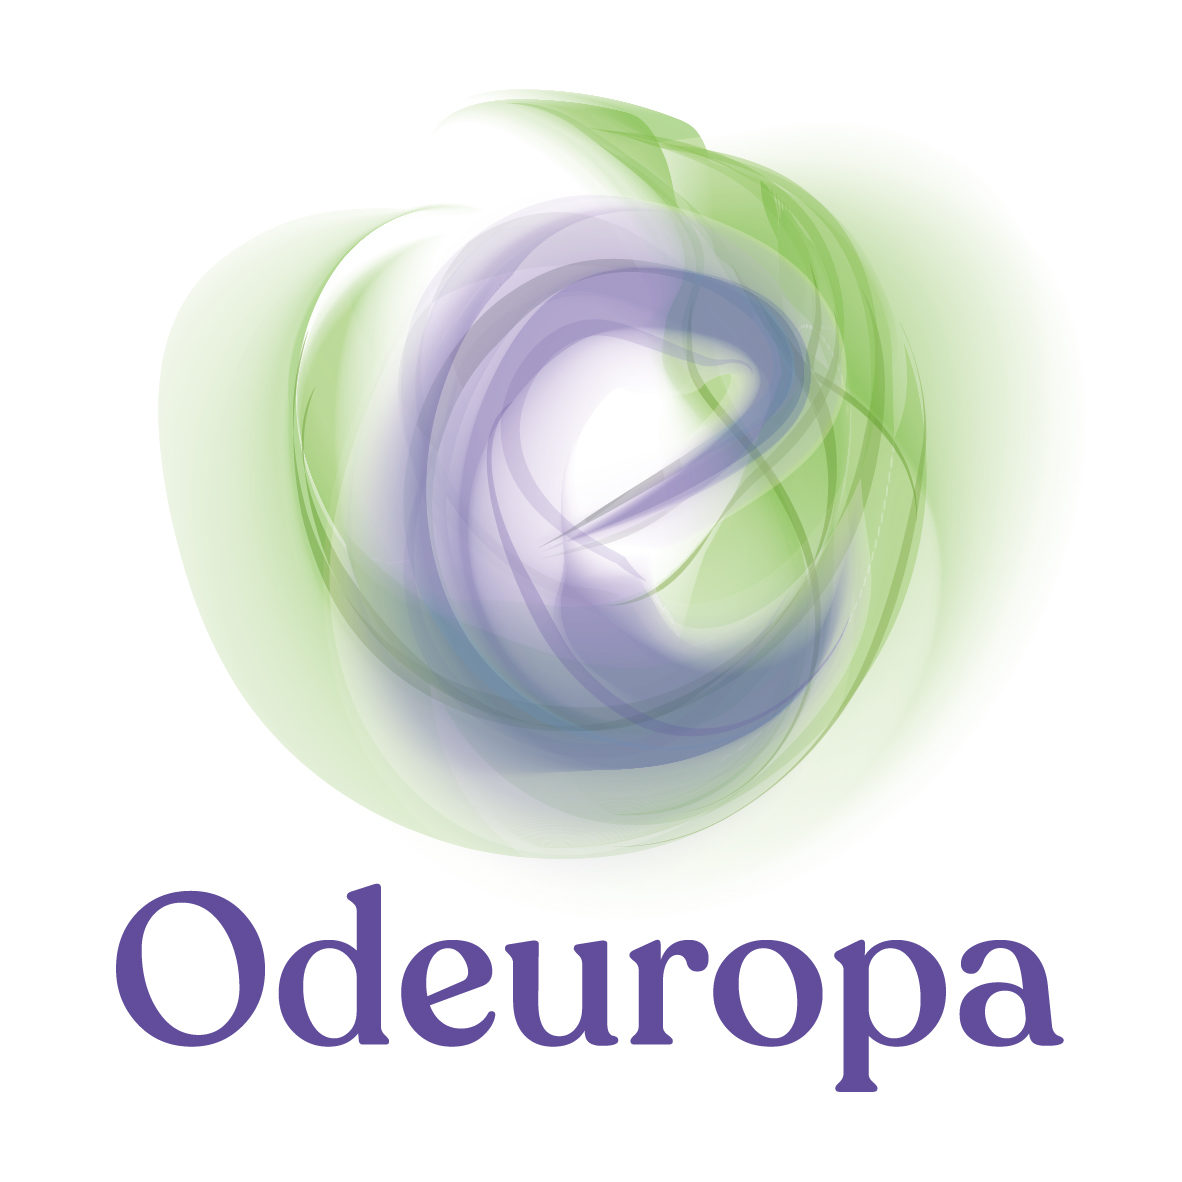 Odeuropa